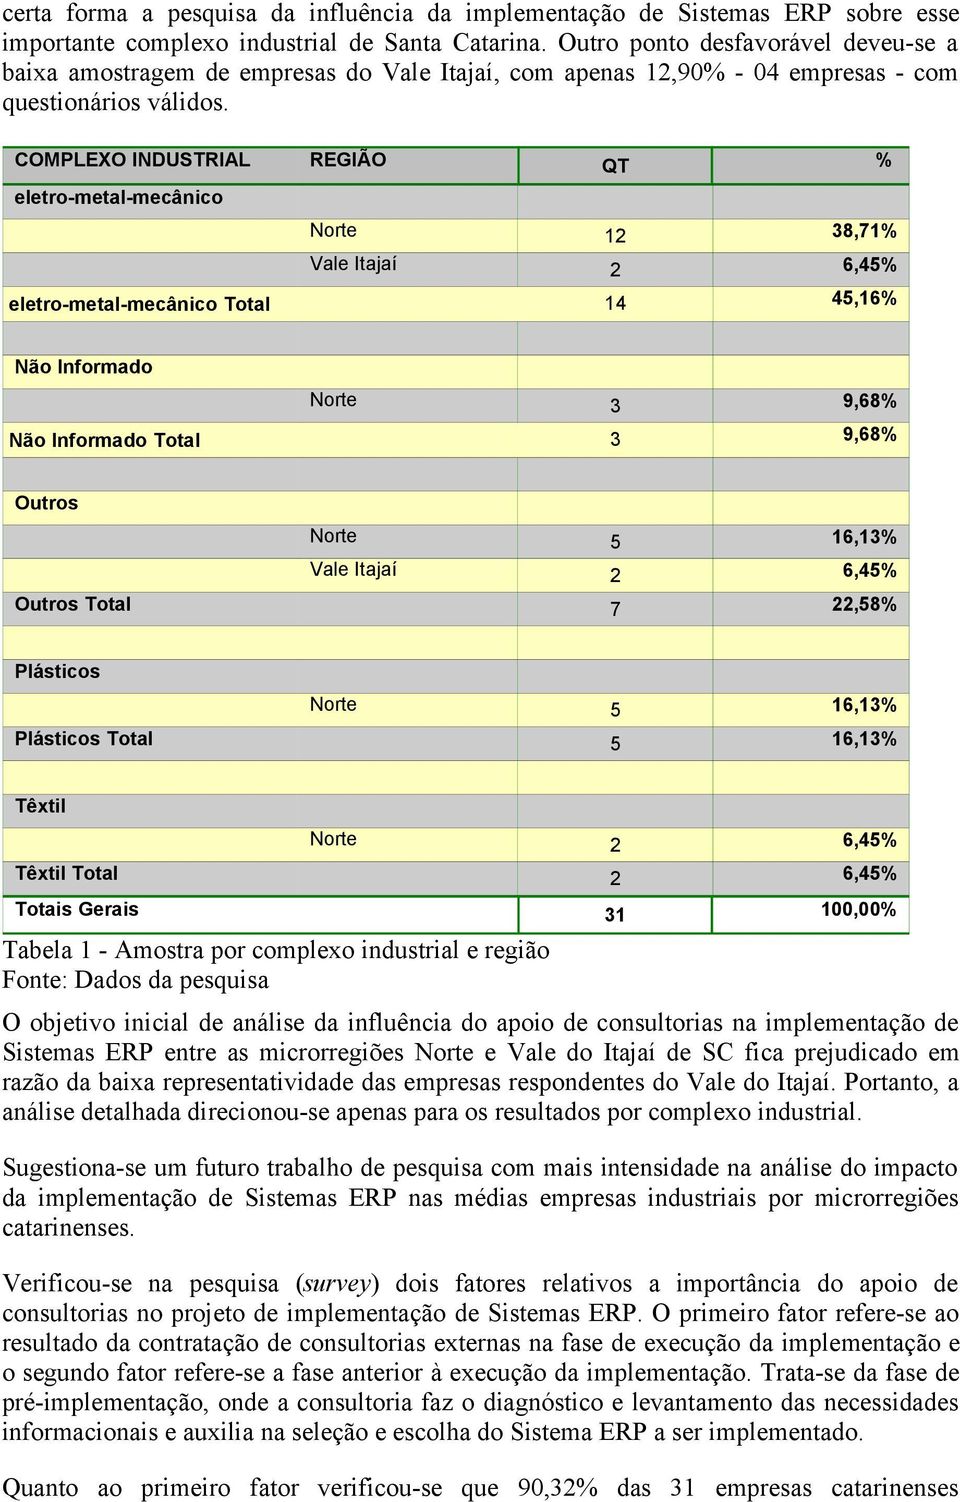 COMPLEXO INDUSTRIAL REGIÃO QT % eletro-metal-mecânico Norte 12 38,71% Vale Itajaí 2 6,45% eletro-metal-mecânico Total 14 45,16% Não Informado Norte 3 9,68% Não Informado Total 3 9,68% Outros Norte 5